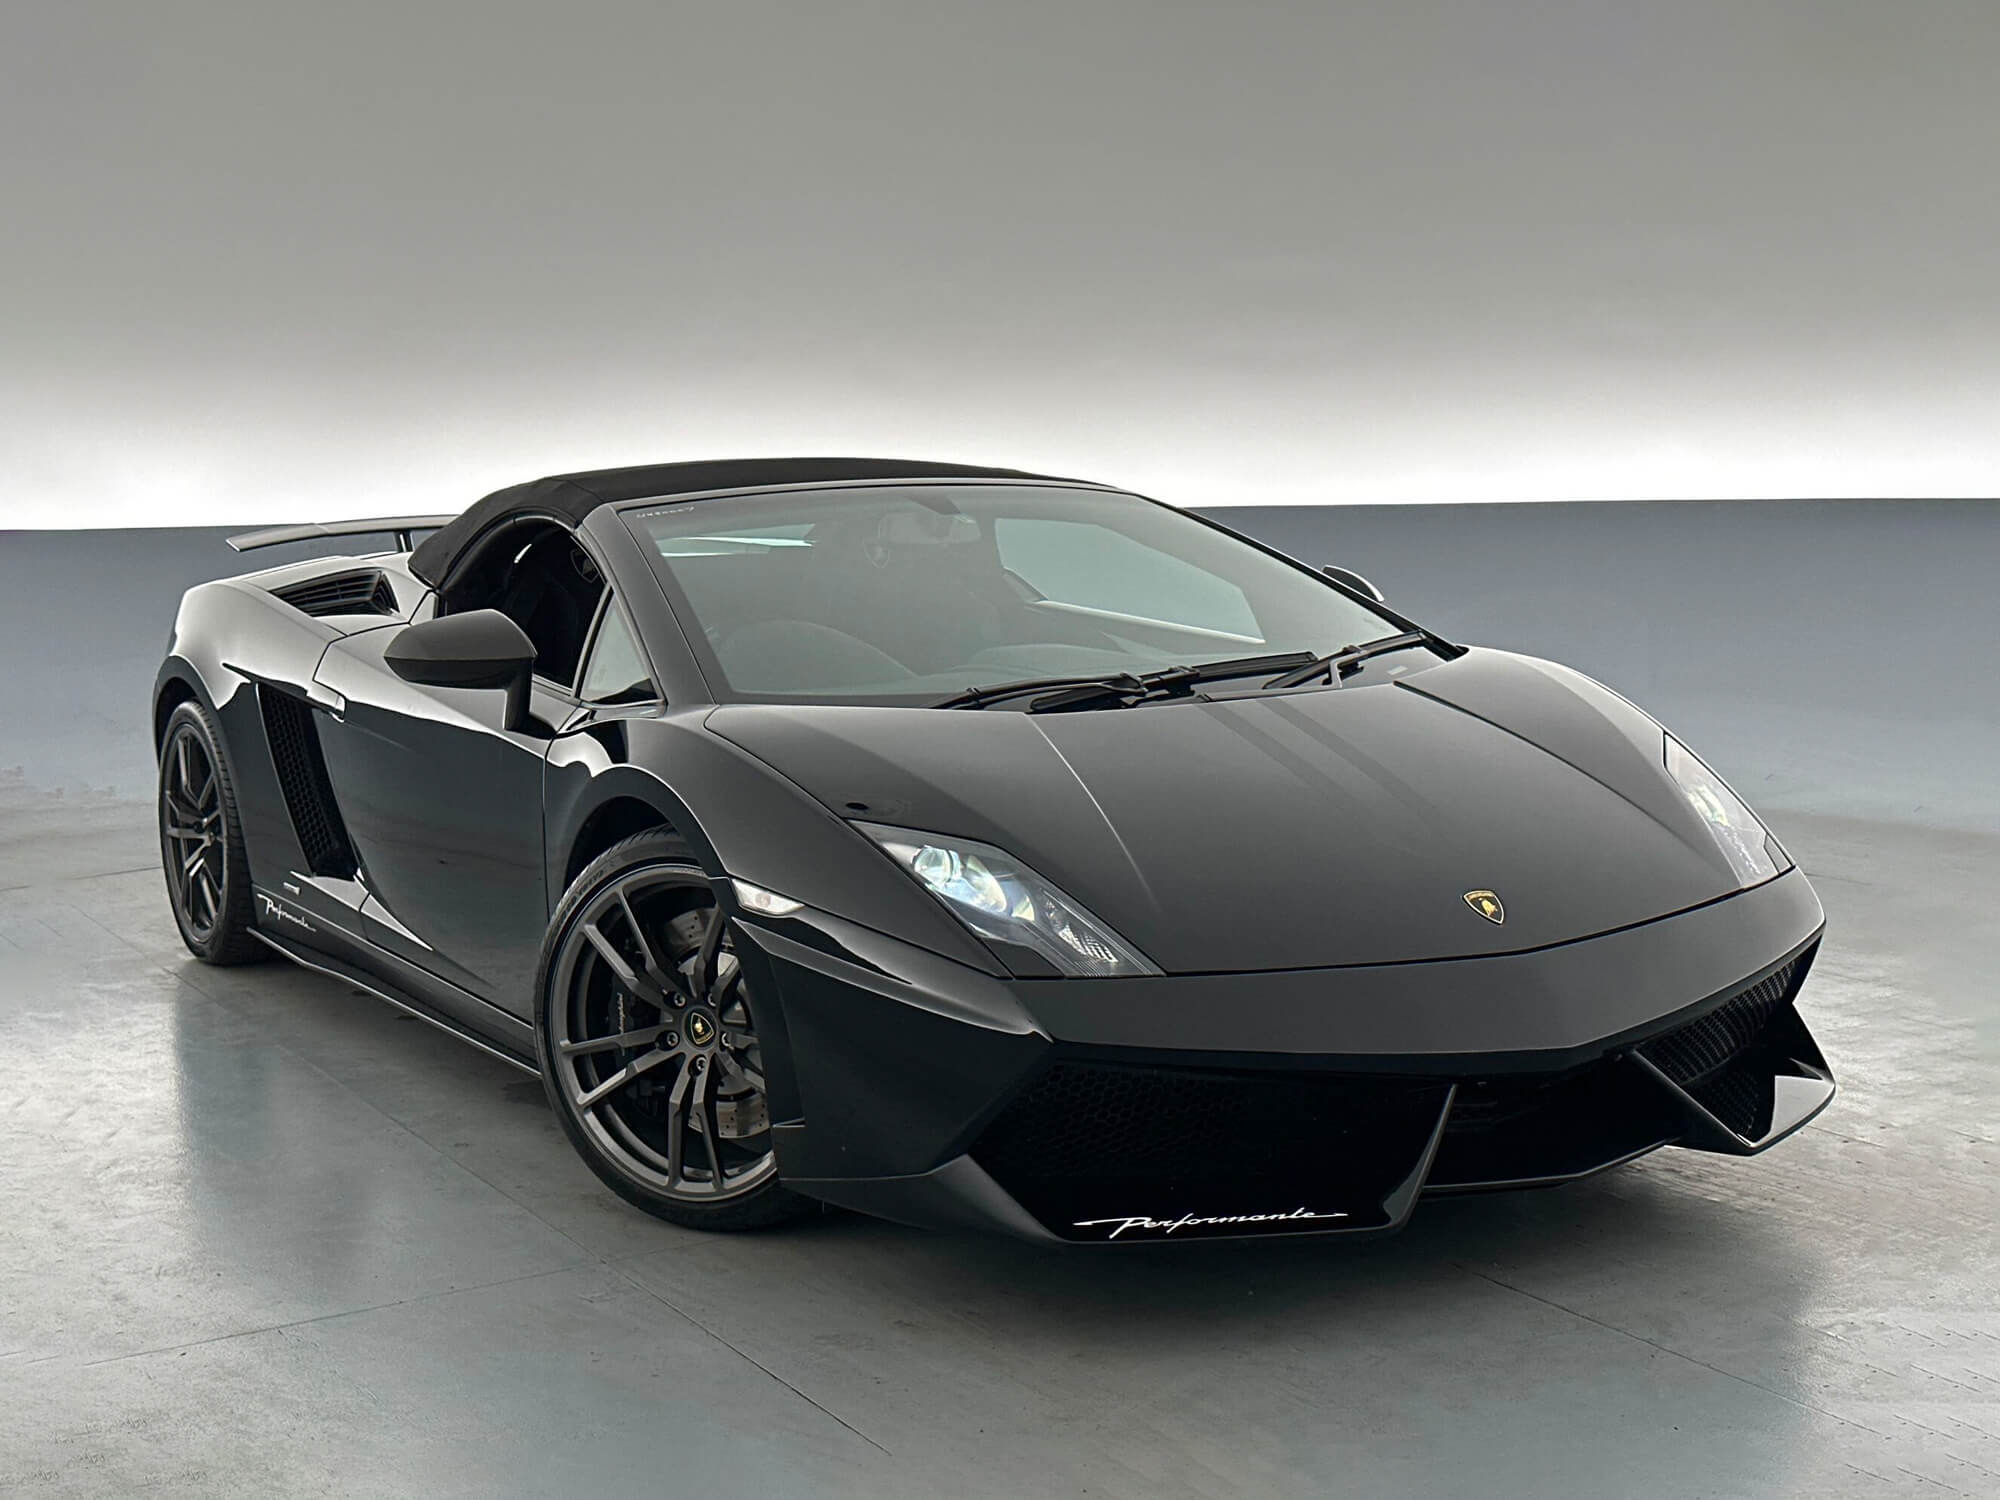 View a black 2012 Lamborghini Gallardo L140 LP570-4 Performante available via auction.